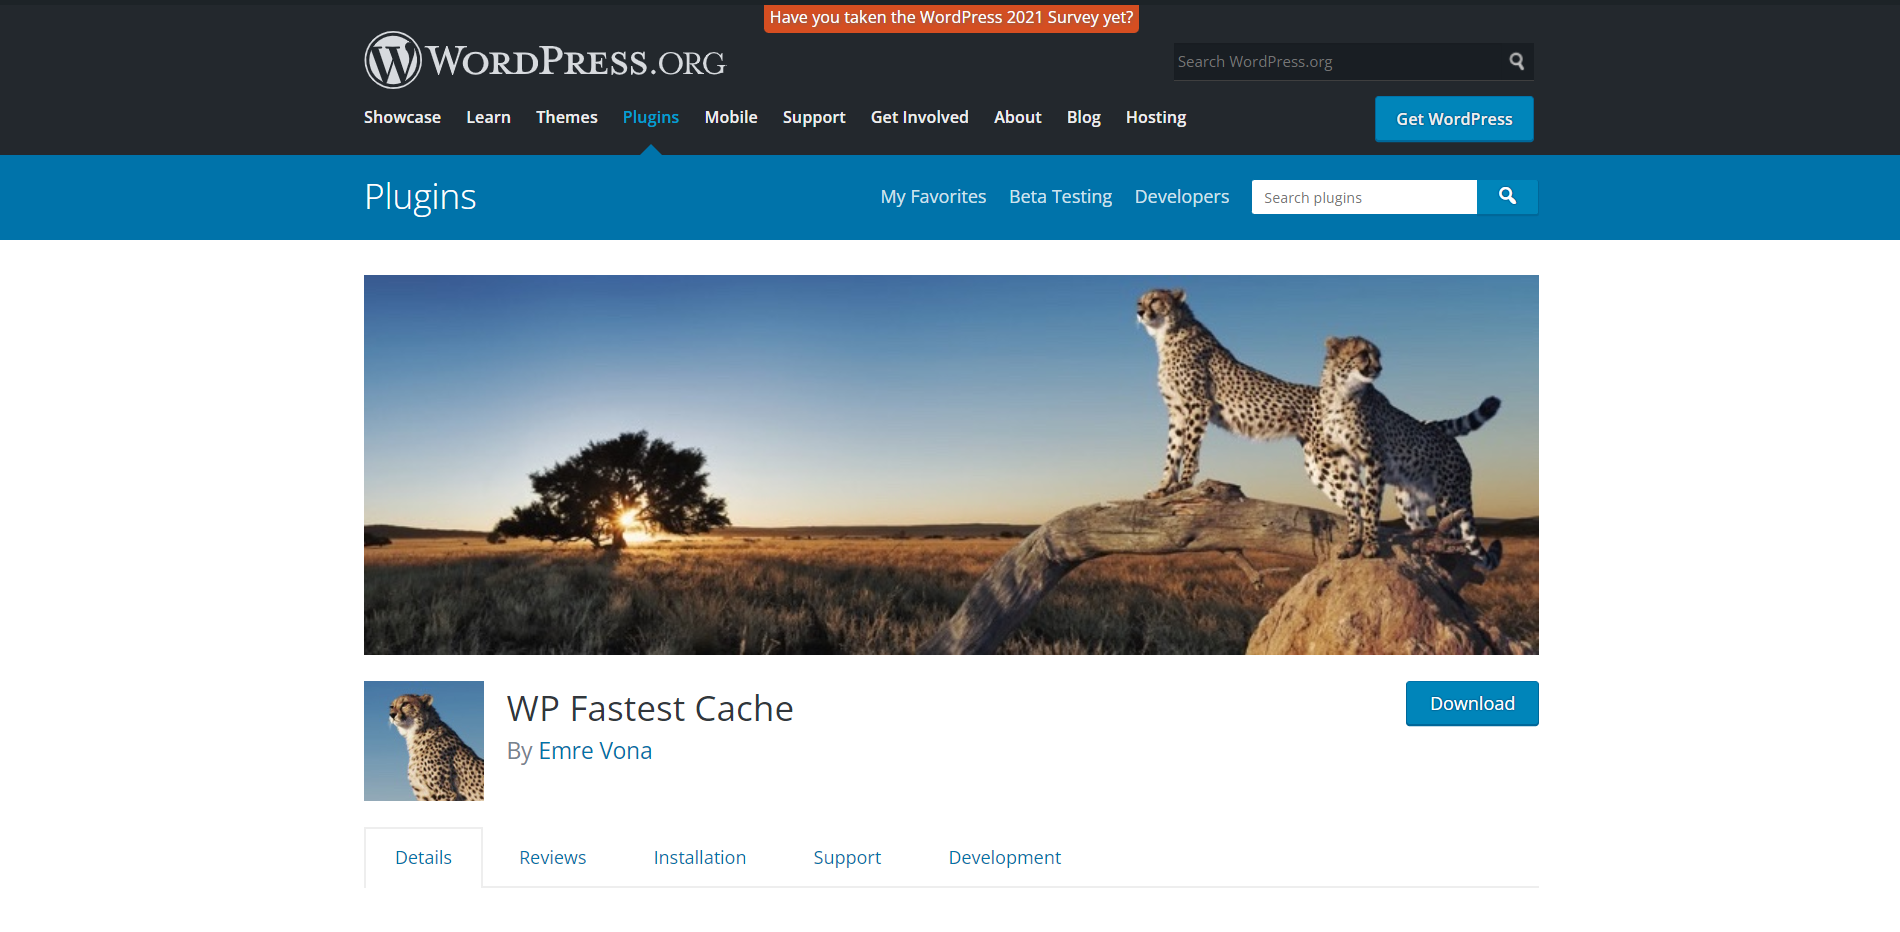 WP Fastest Cache WordPress plugin